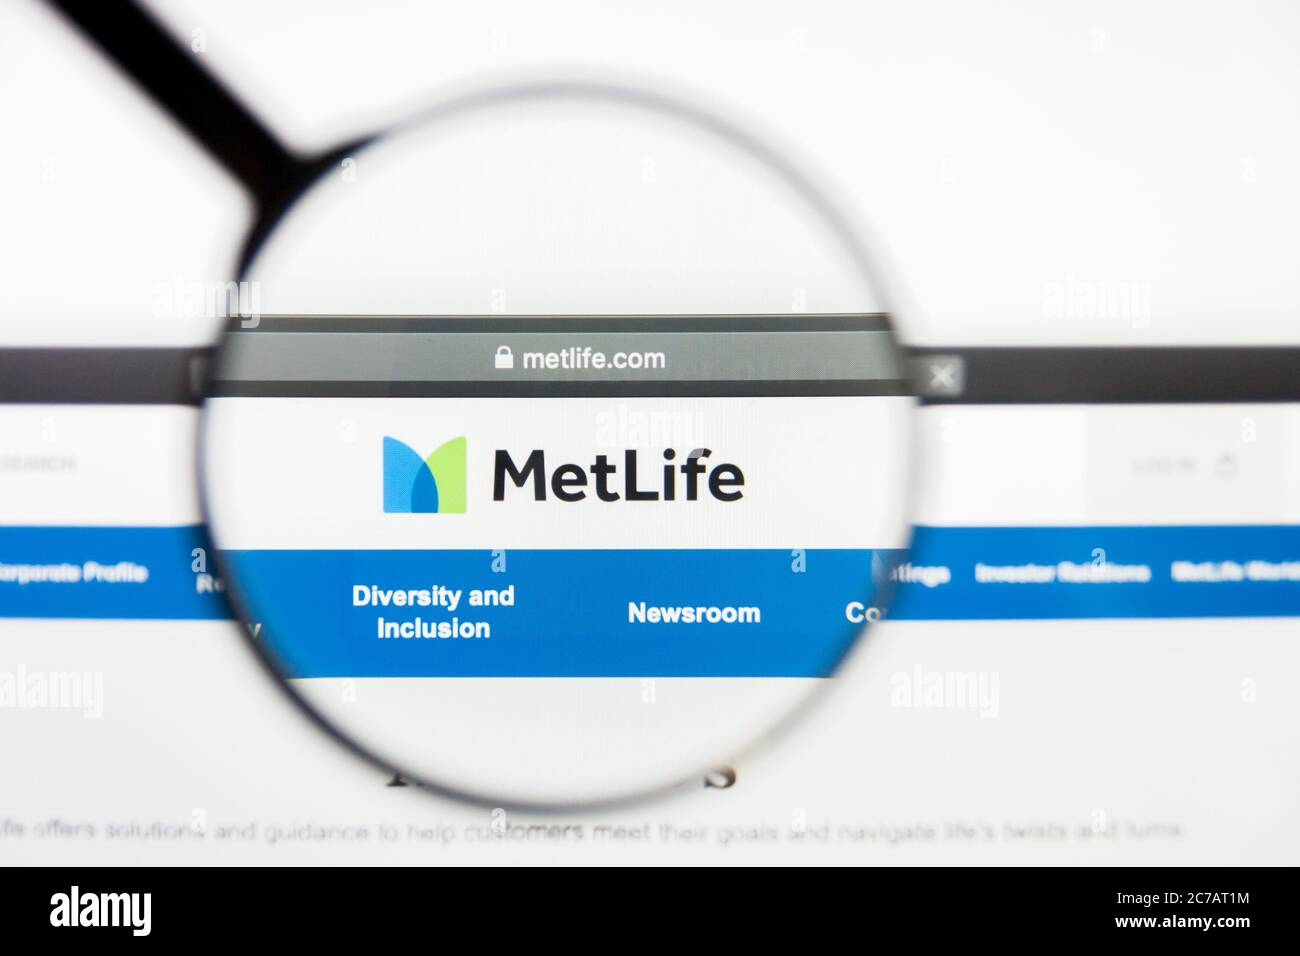 Los Angeles, California, USA - 10 March 2019: Illustrative Editorial, MetLife website homepage. MetLife logo visible on display screen Stock Photo